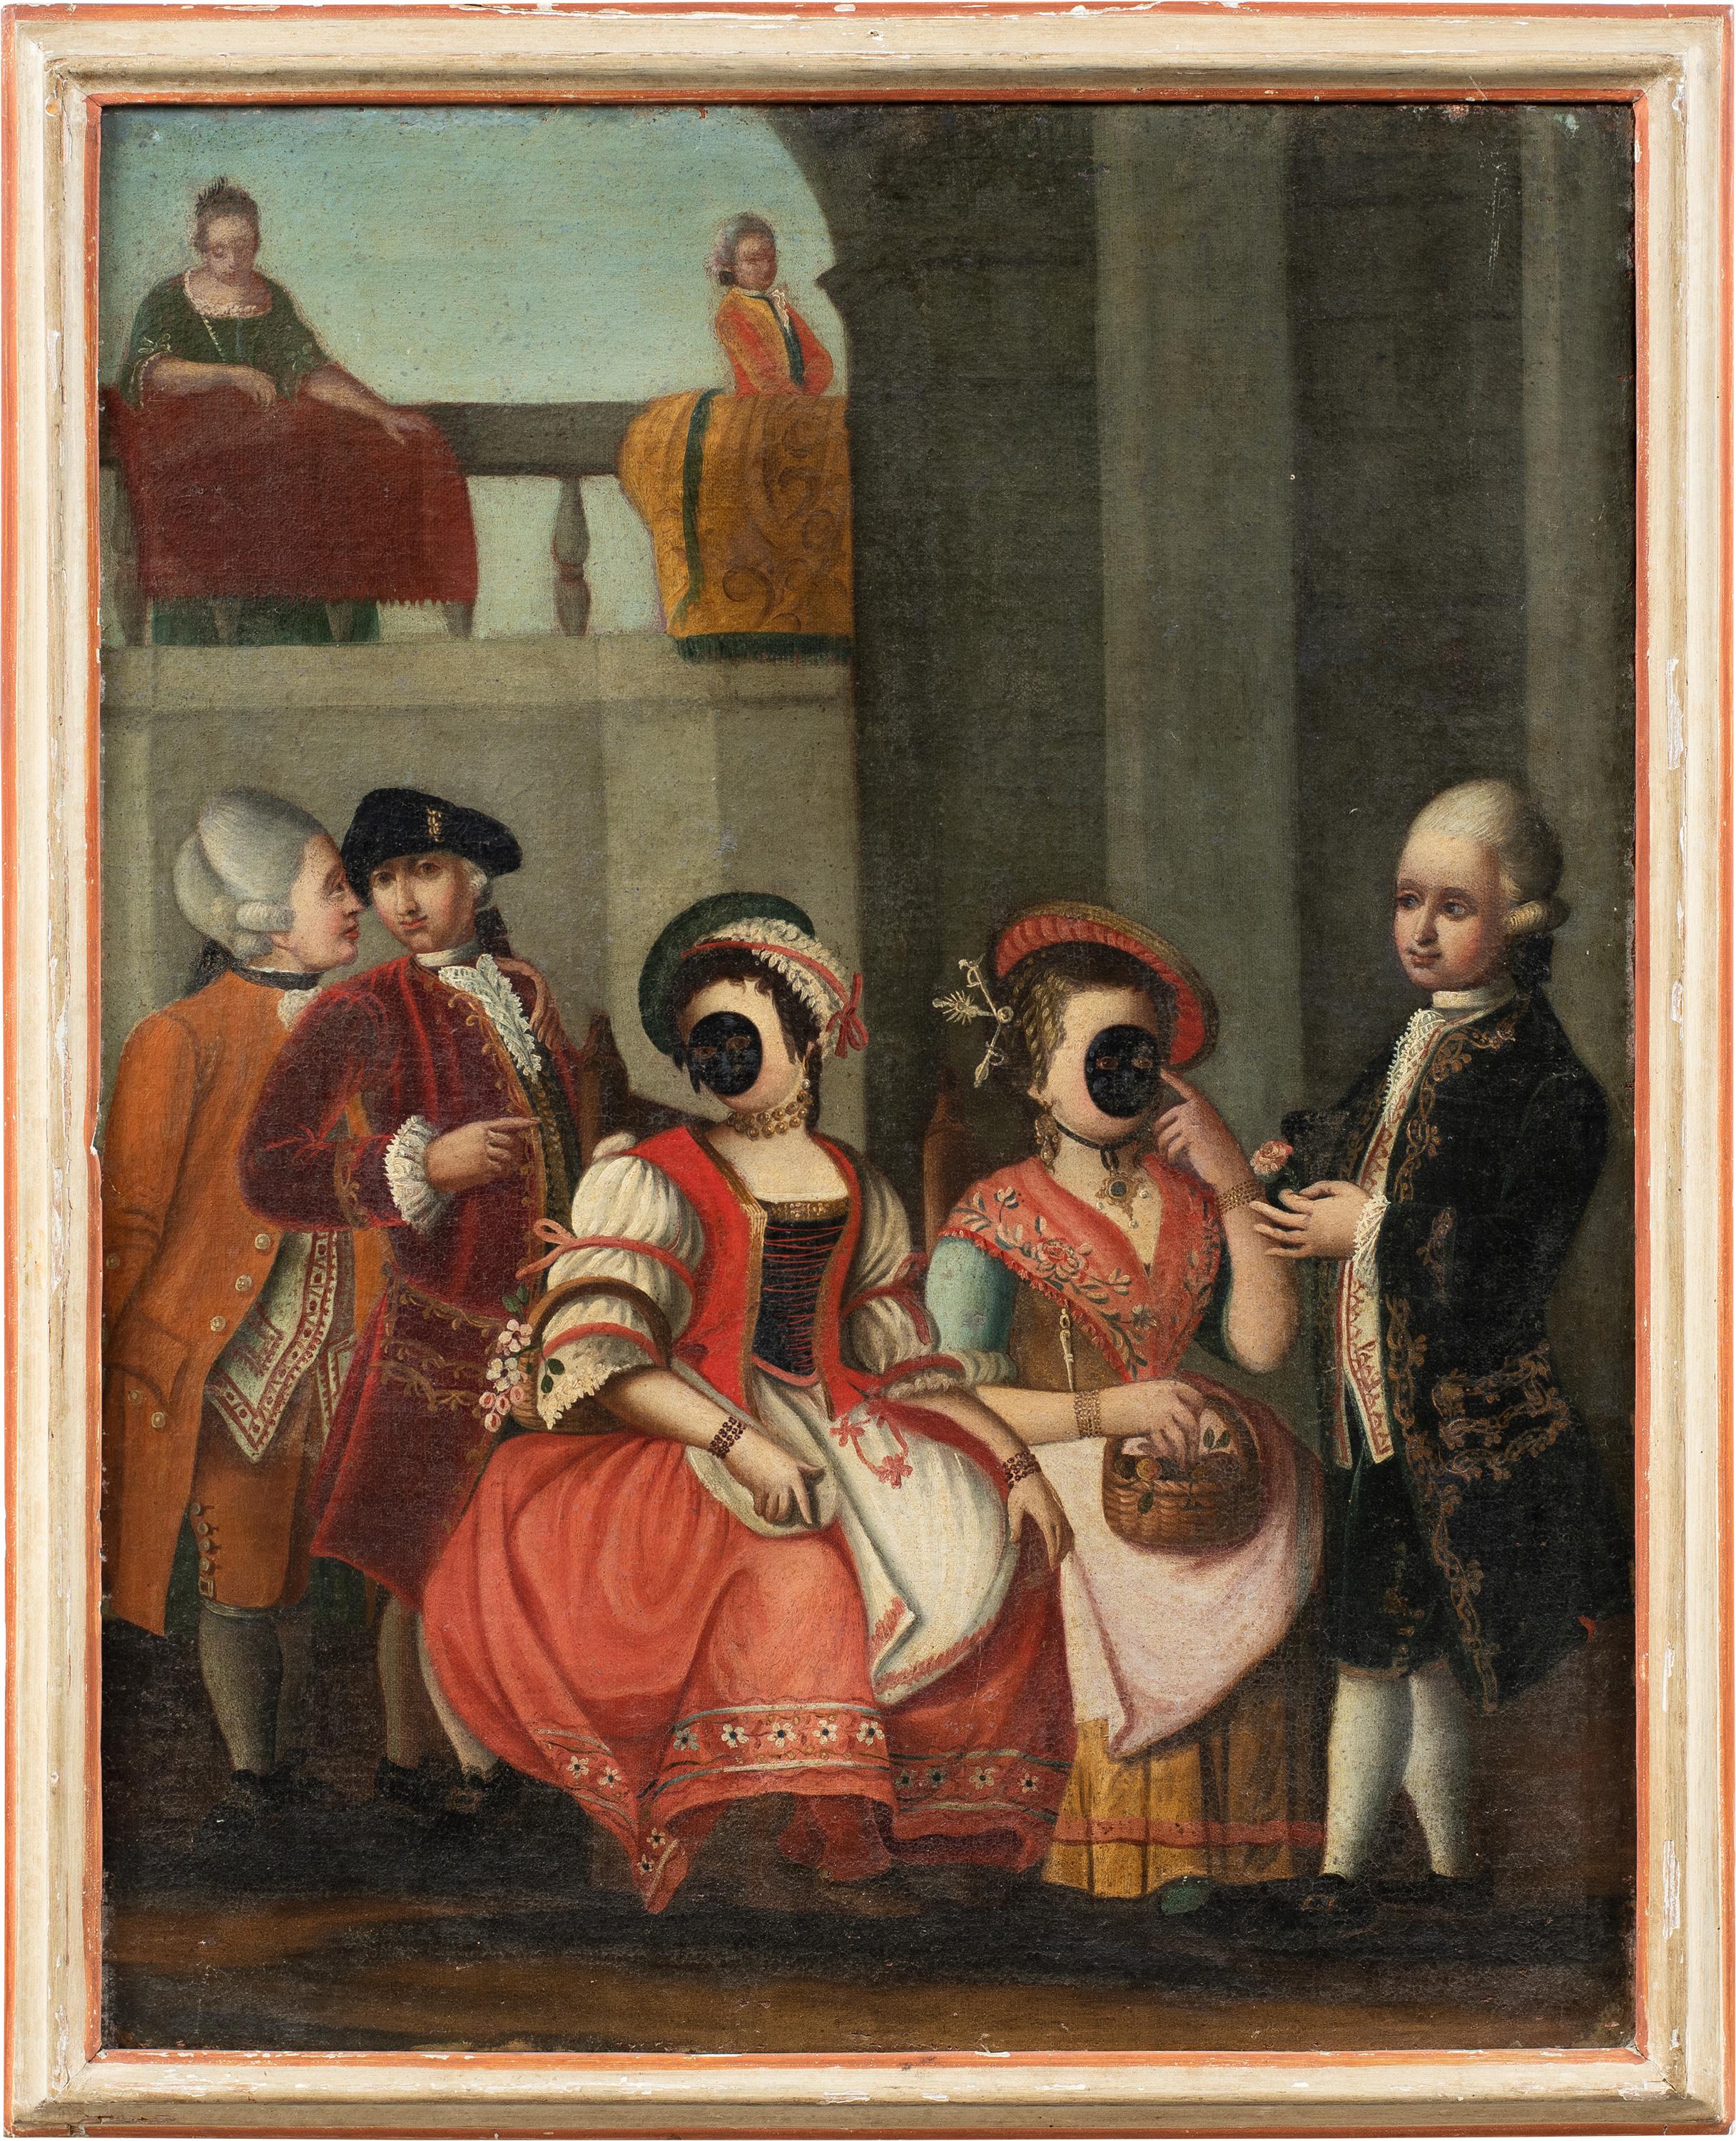 Rococò Venetian master - 18th century figure painting - Masked figurines